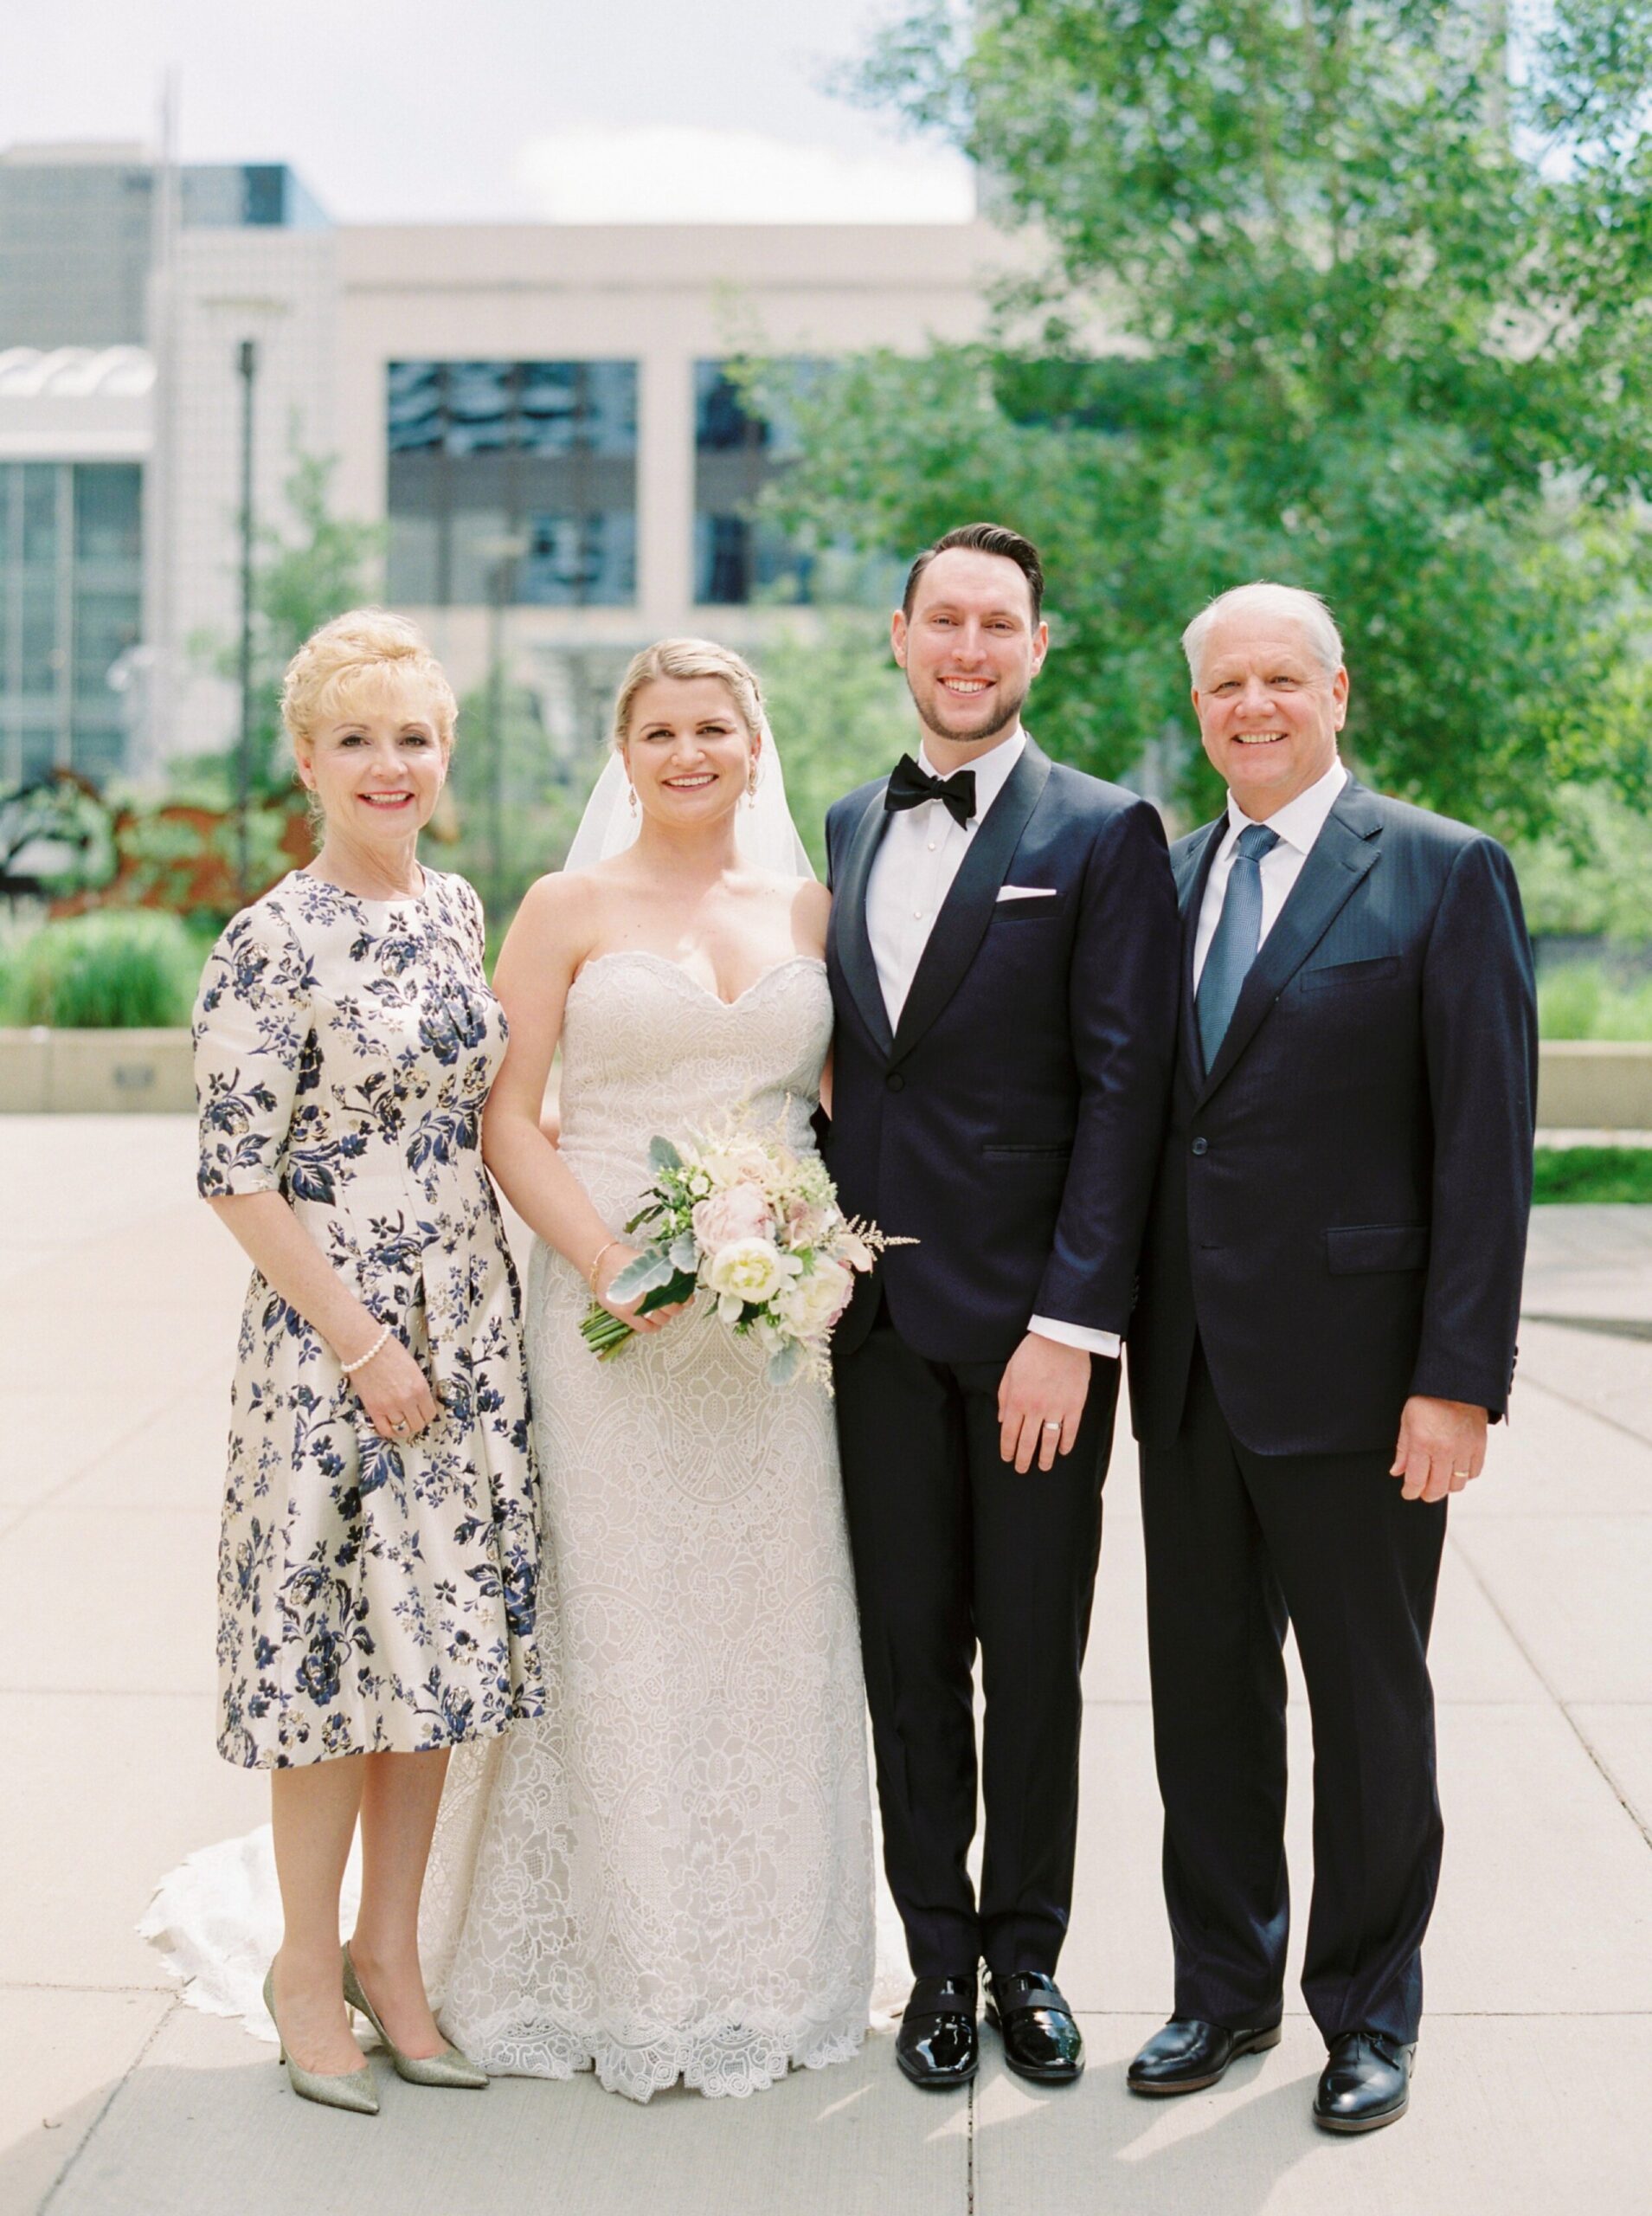  family formal portrait at a wedding | Deane House Wedding | Calgary photographer | fine art film photography Justine Milton 